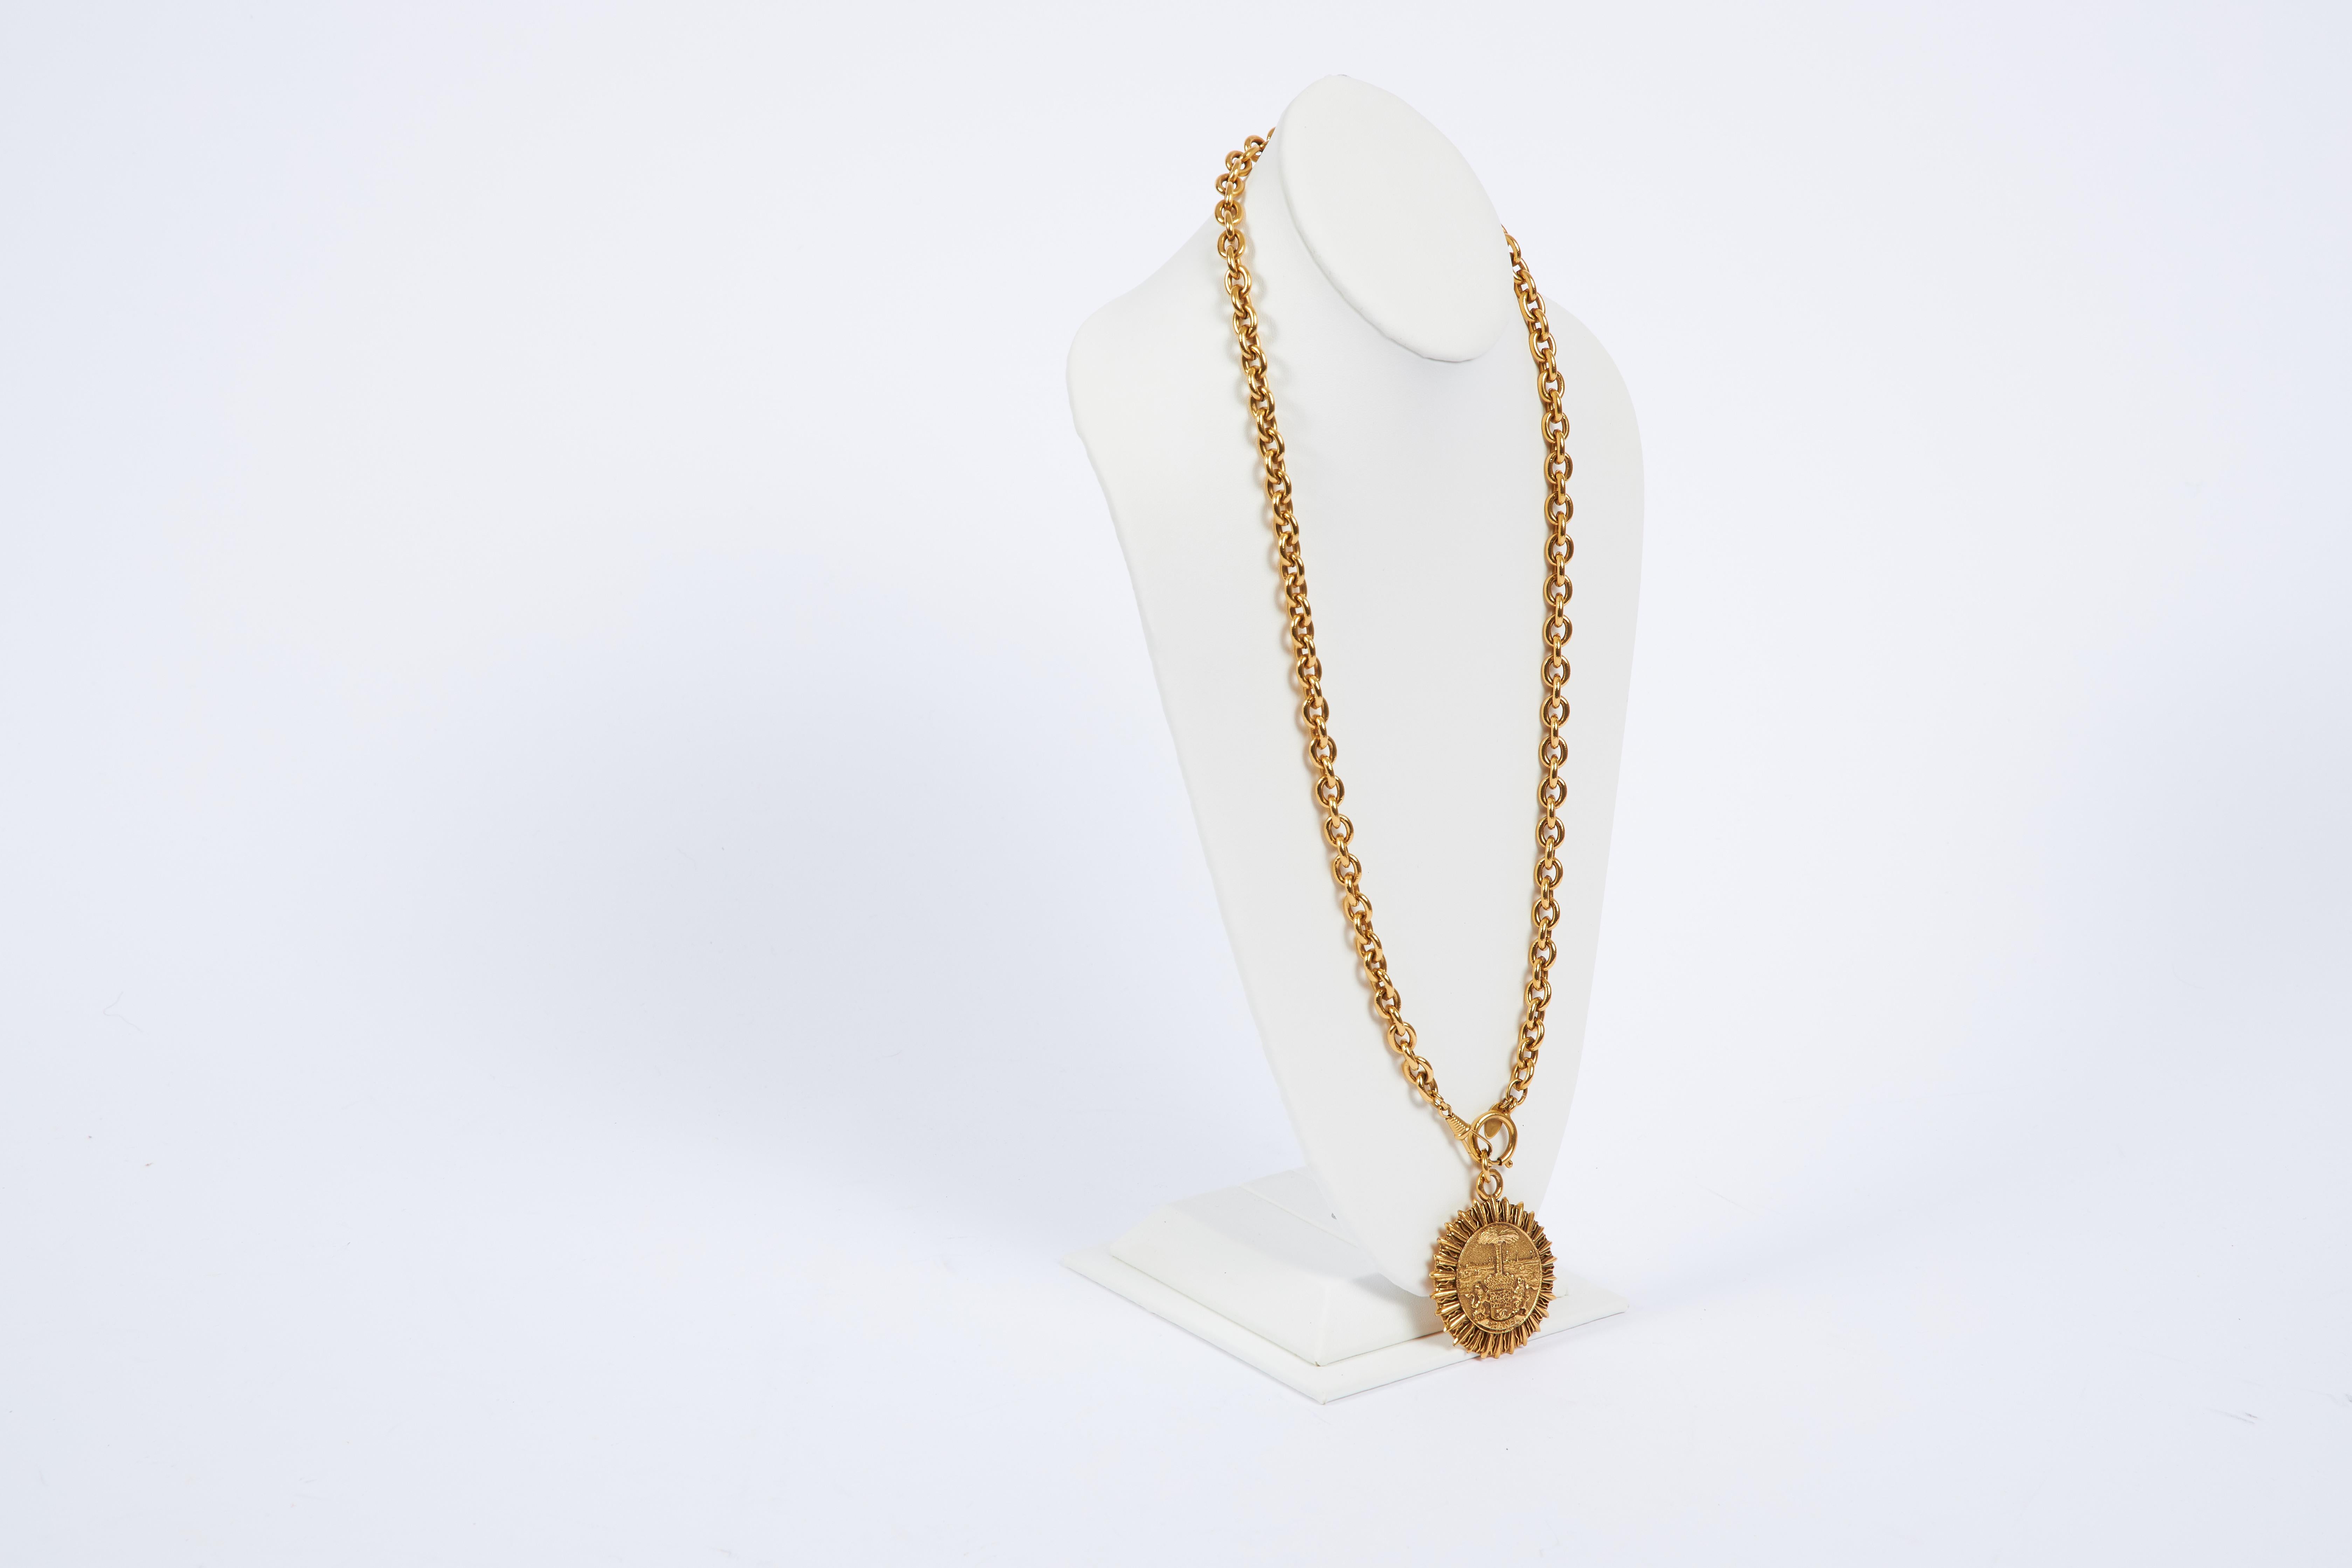 1980s Chanel goldtone metal sun tarot pendant necklace. Comes with original box.